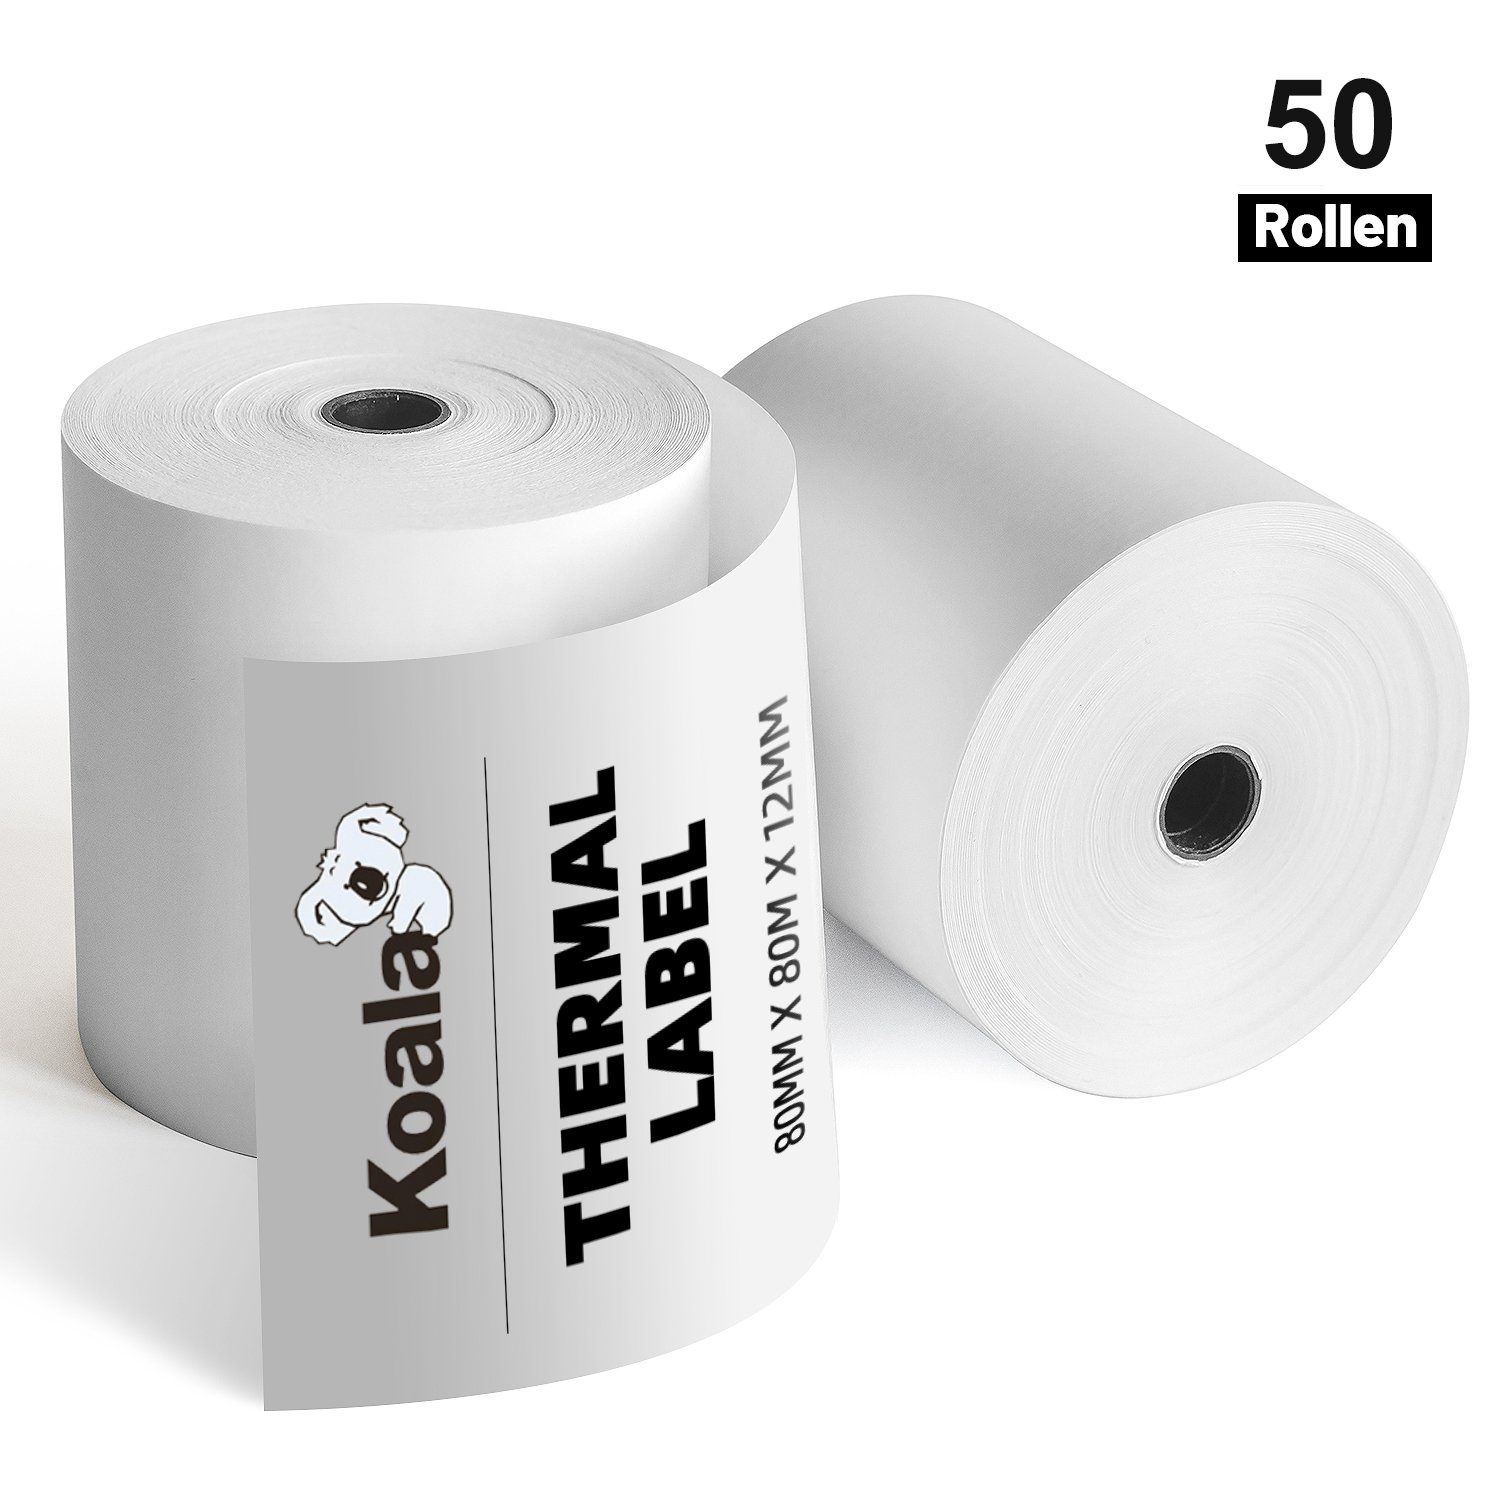 Koala Etikettenpapier 50 Rollen 80x 80 mm Thermopapier Bonrolle für Kassen, Drucker